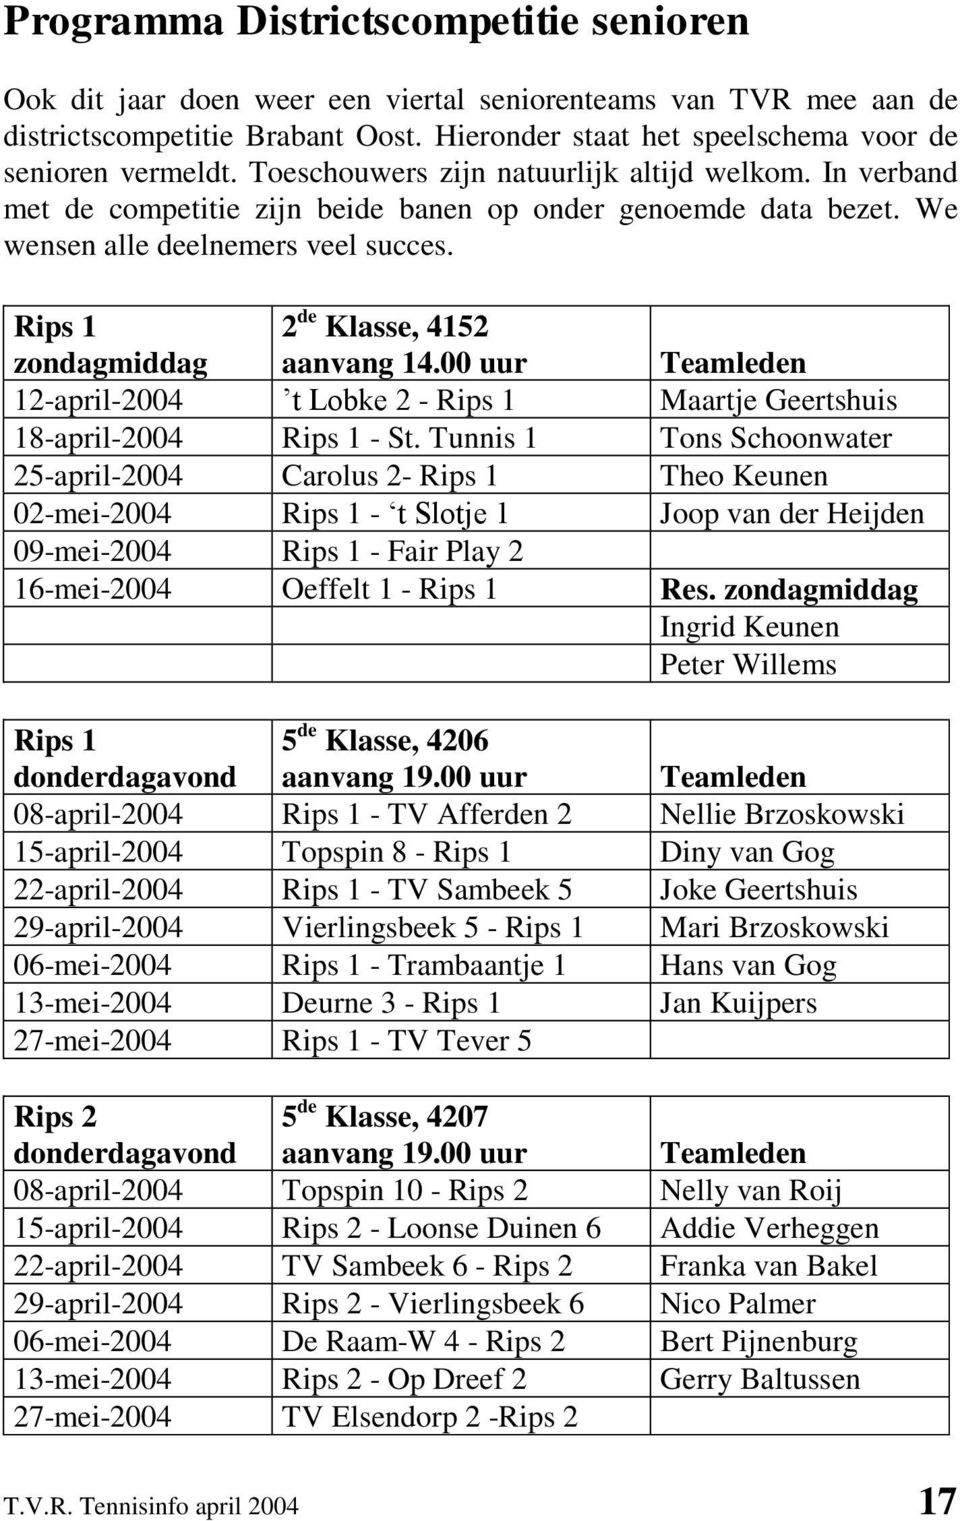 Rips 1 zondagmiddag 2 de Klasse, 4152 aanvang 14.00 uur Teamleden 12-april-2004 t Lobke 2 - Rips 1 Maartje Geertshuis 18-april-2004 Rips 1 - St.